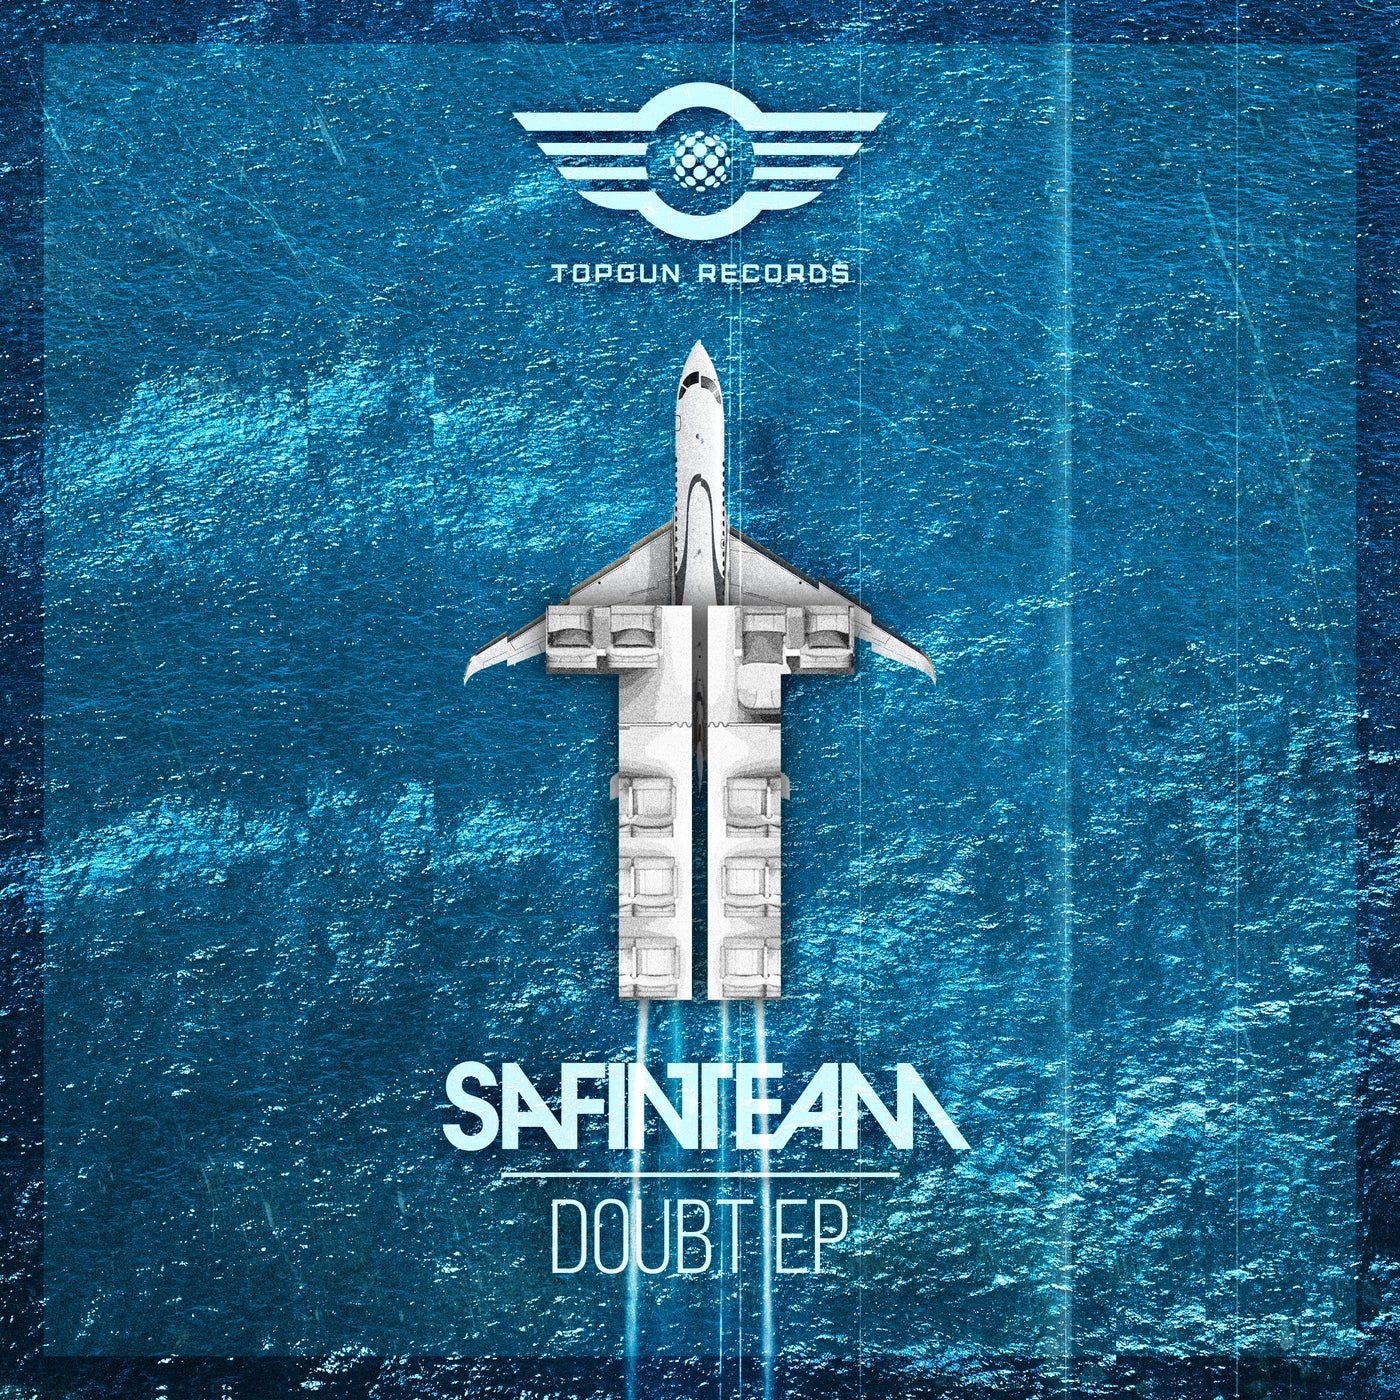 Safinteam – Doubt EP [TOPGUNREC002D]